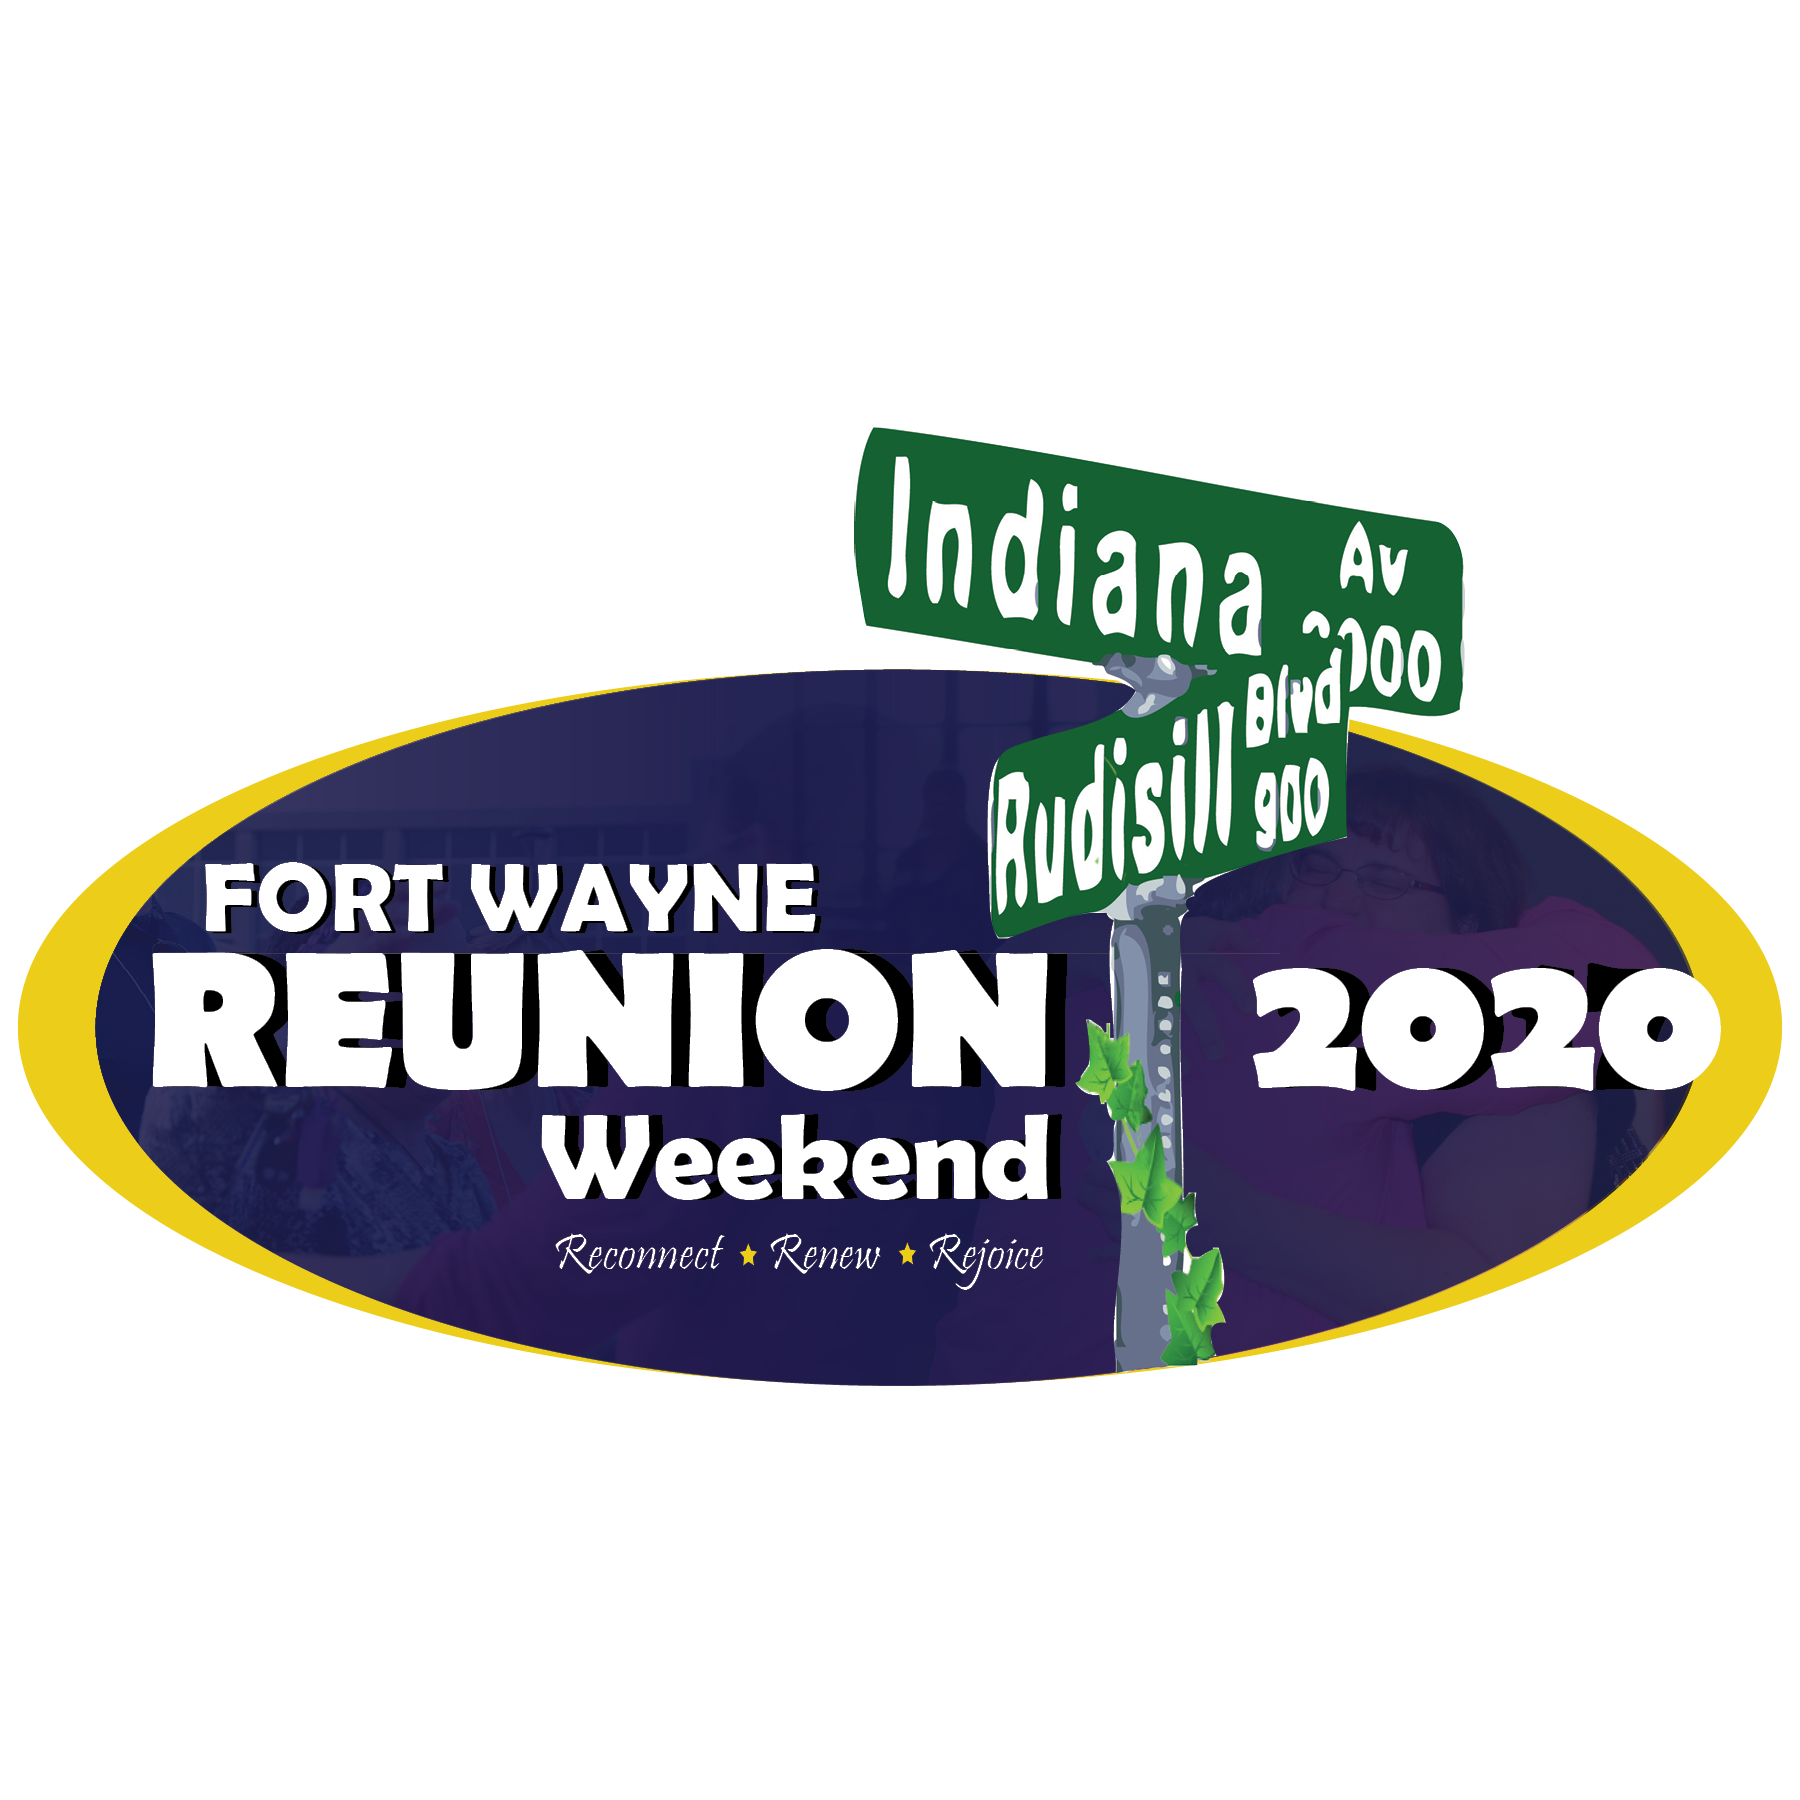 FW Reunion Weekend Logo Samples 2020